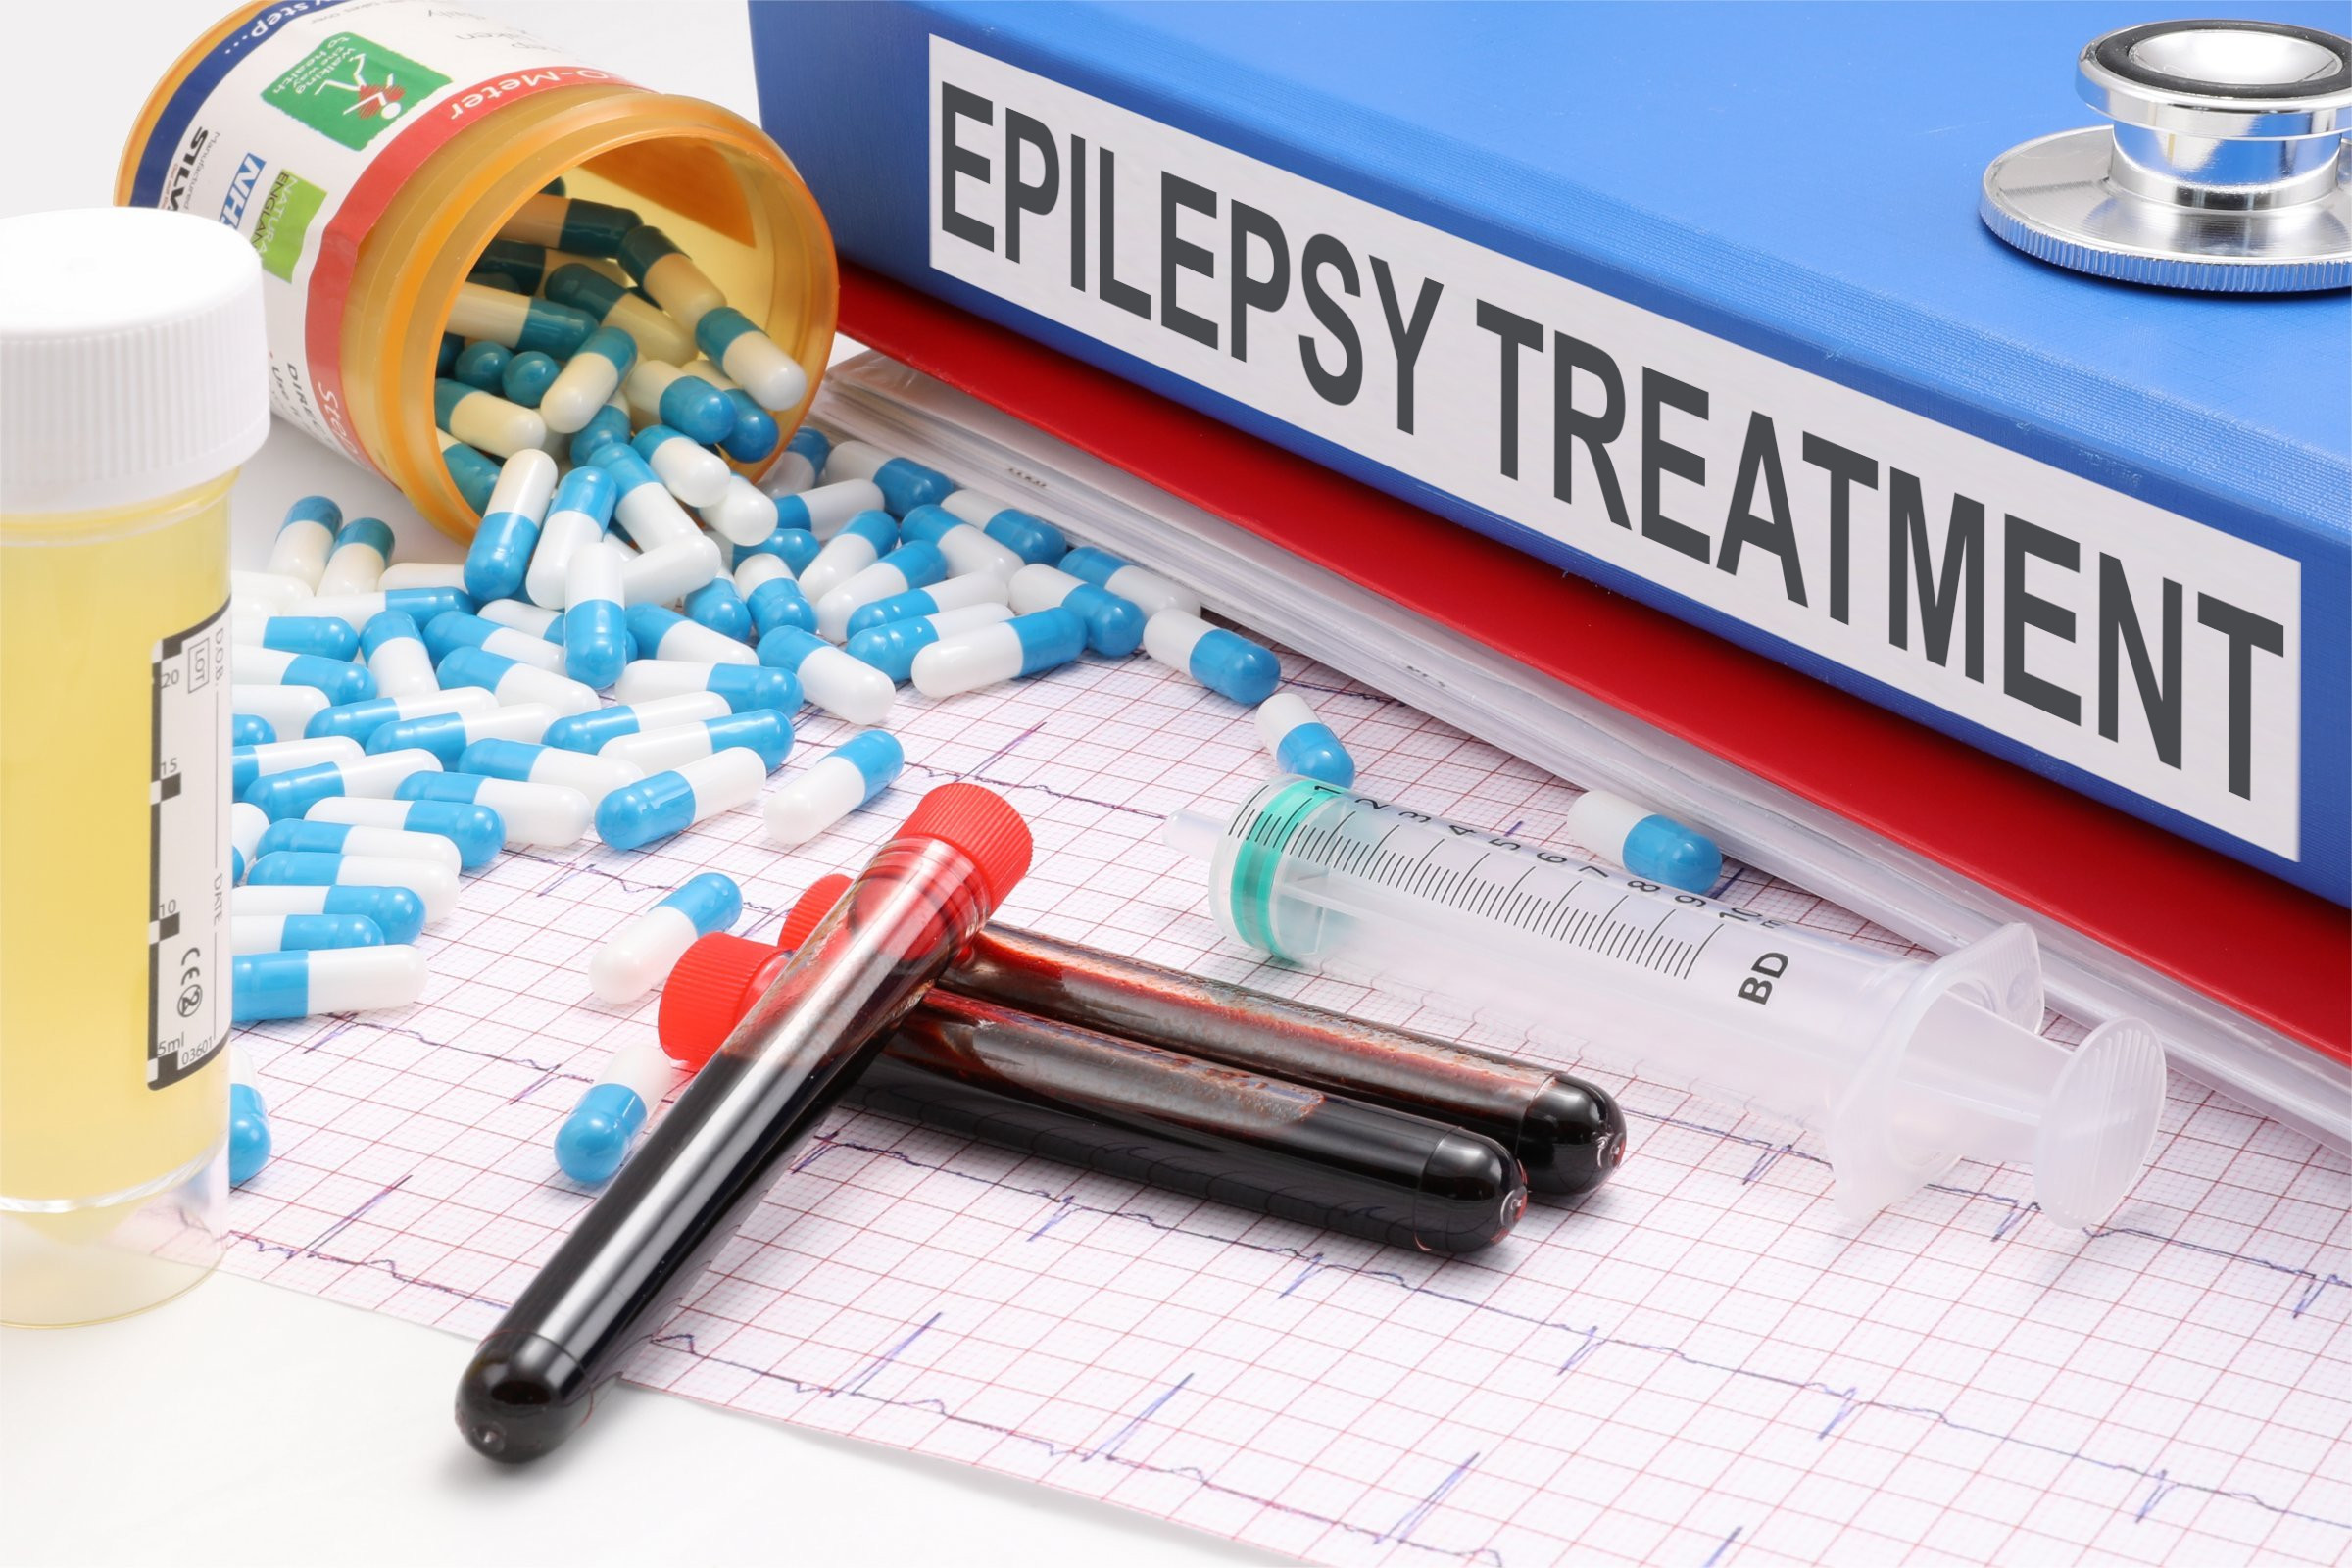 epilepsy-treatment-free-of-charge-creative-commons-medical-image